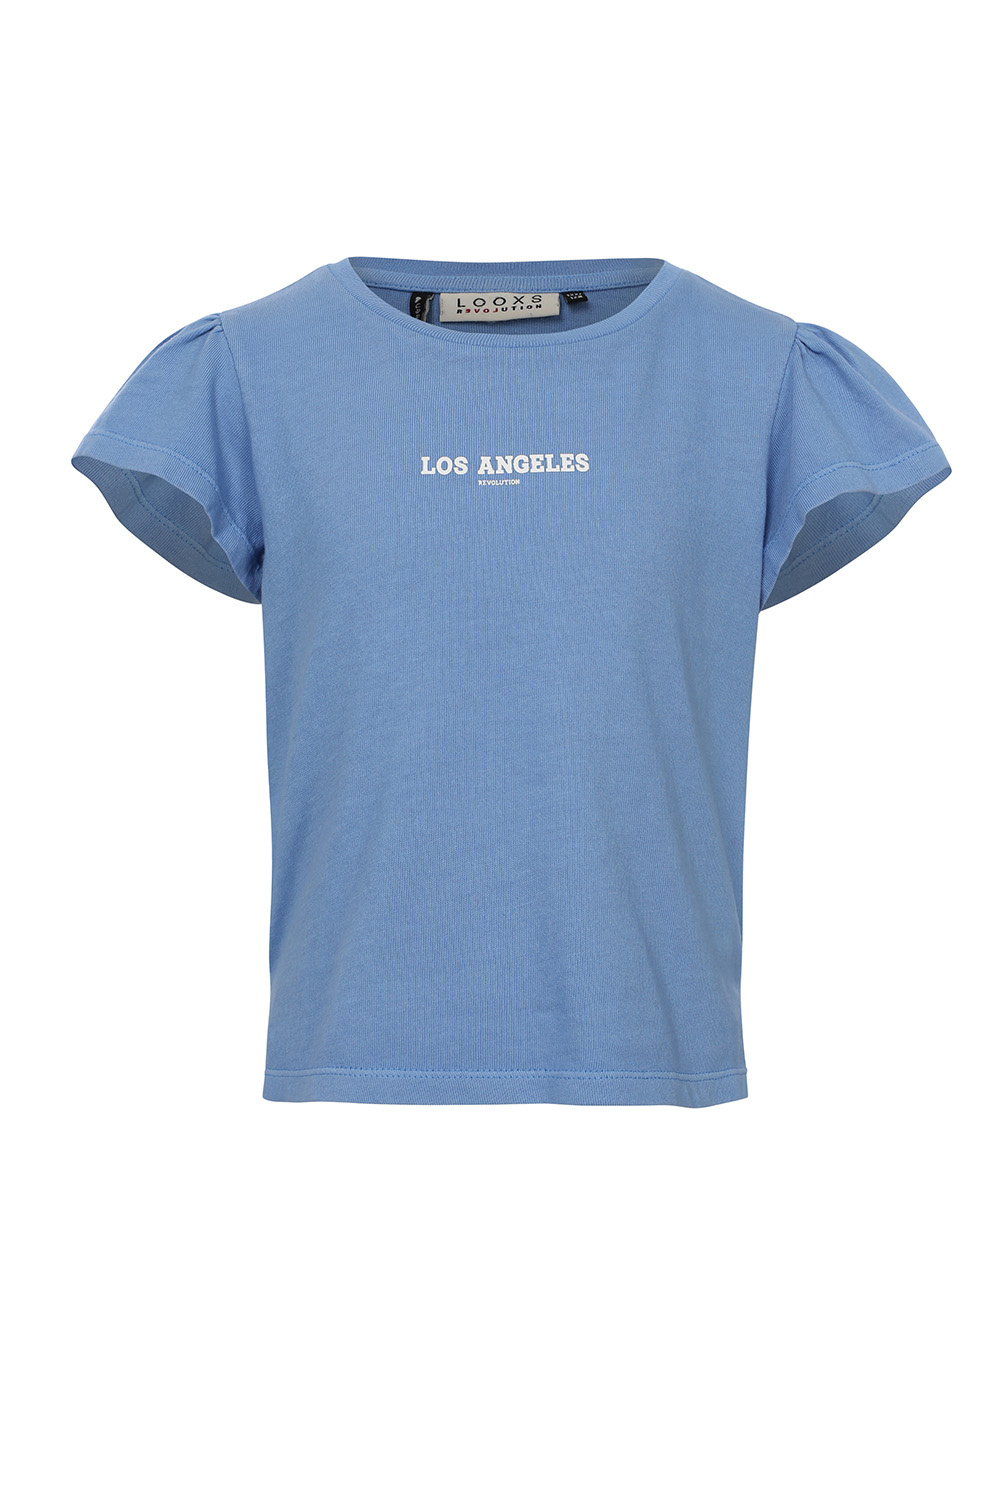 LOOXS 10sixteen Meisjes t-shirt - Sky blauw